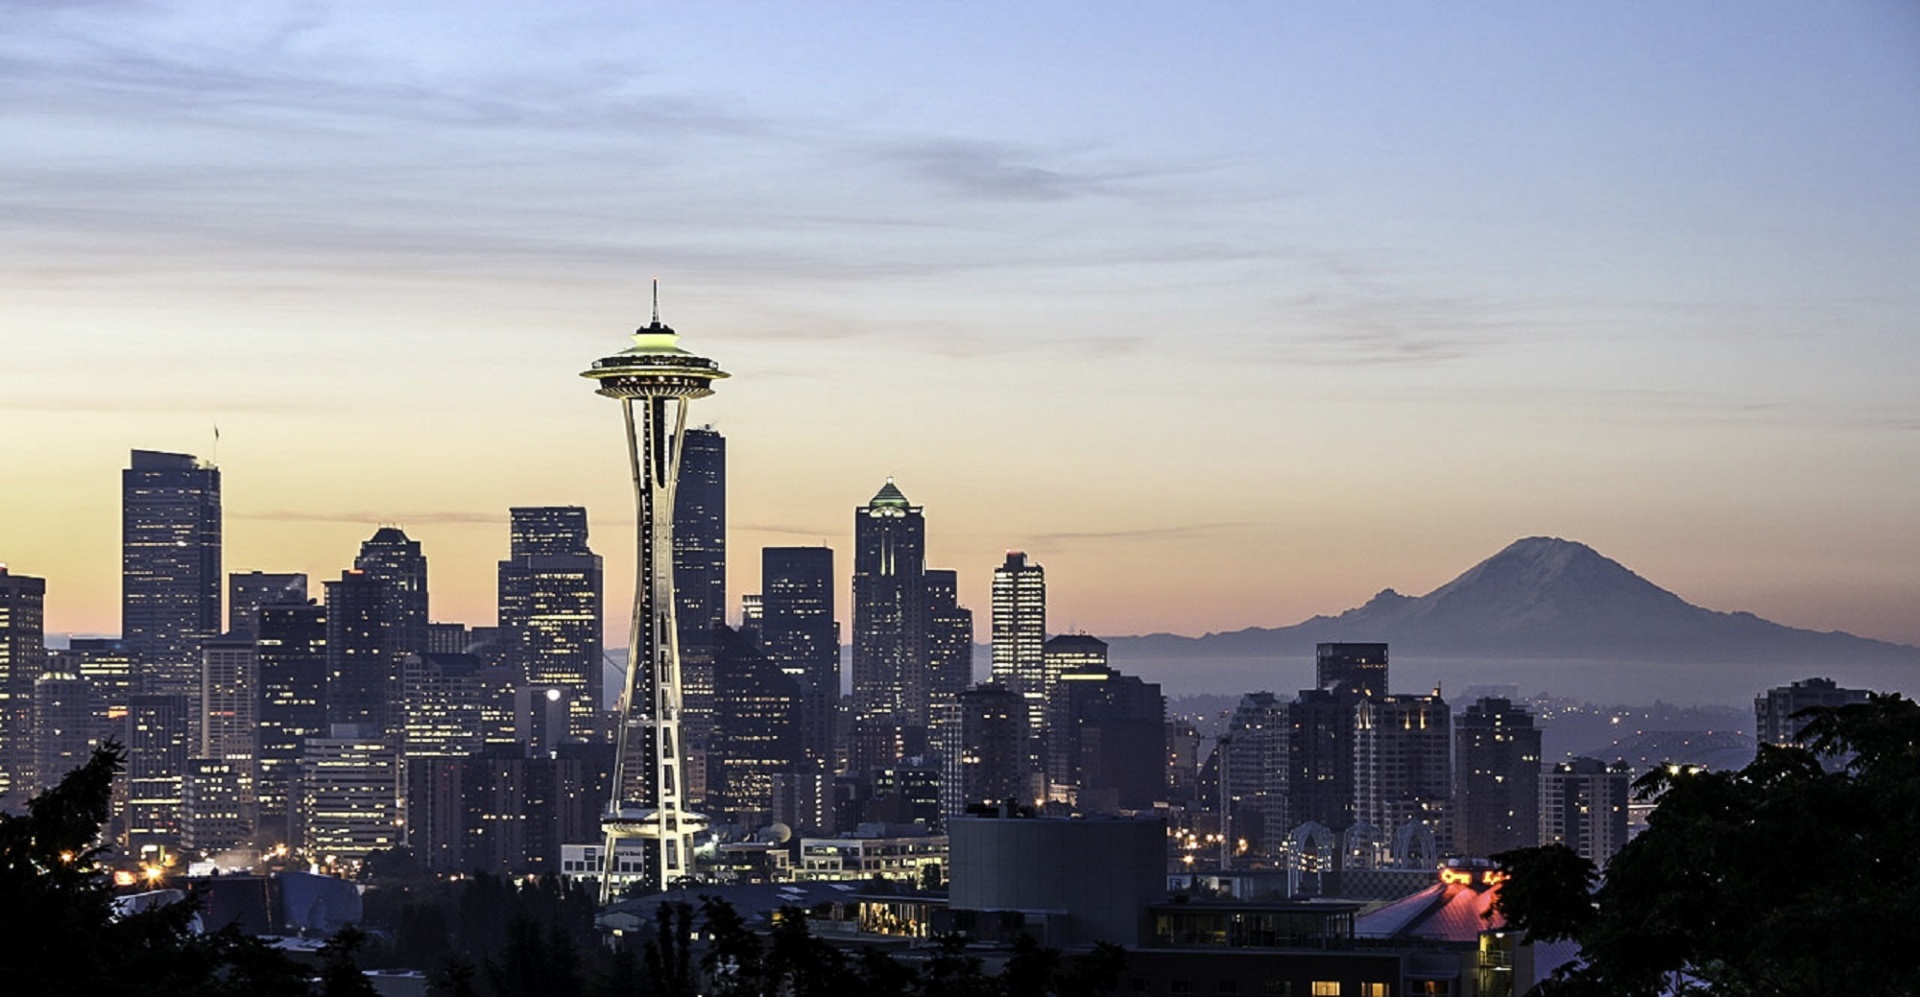 Seattle Washington's Skyline with the Space Needle